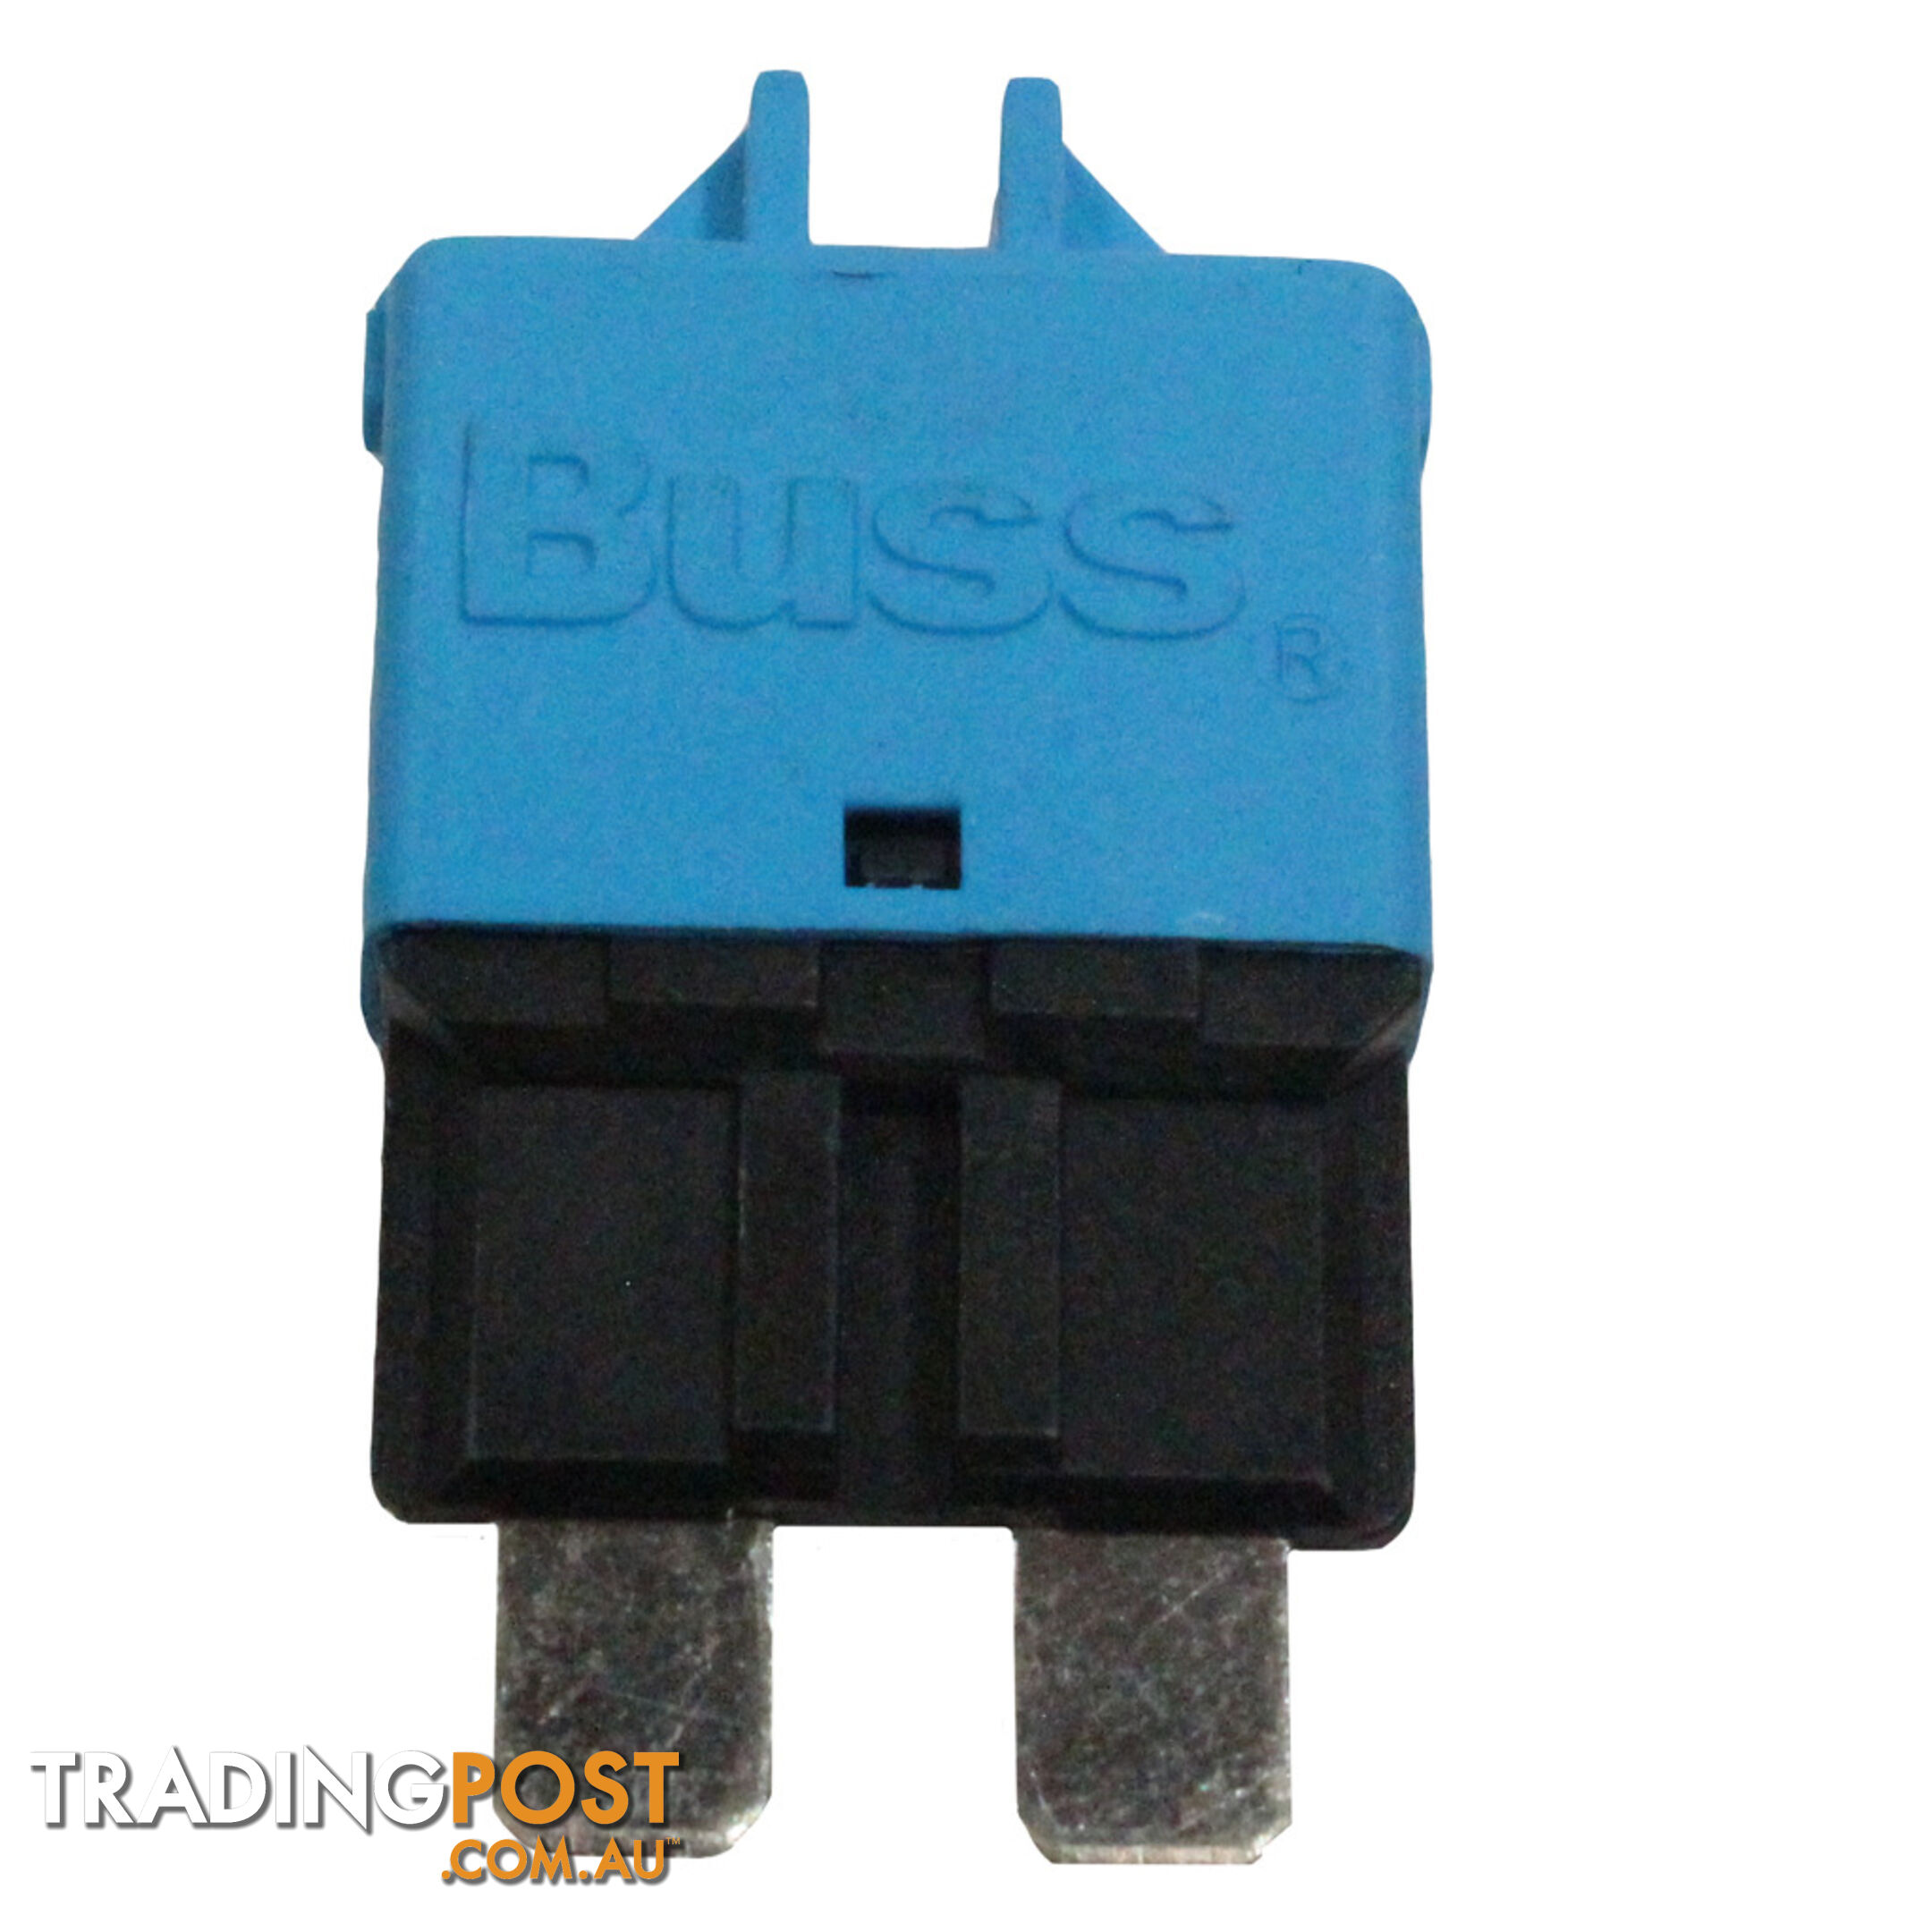 Bussman 15amp 12-24V Resettable Blade Fuse Circuit Breaker Manual Reset SKU - 10362